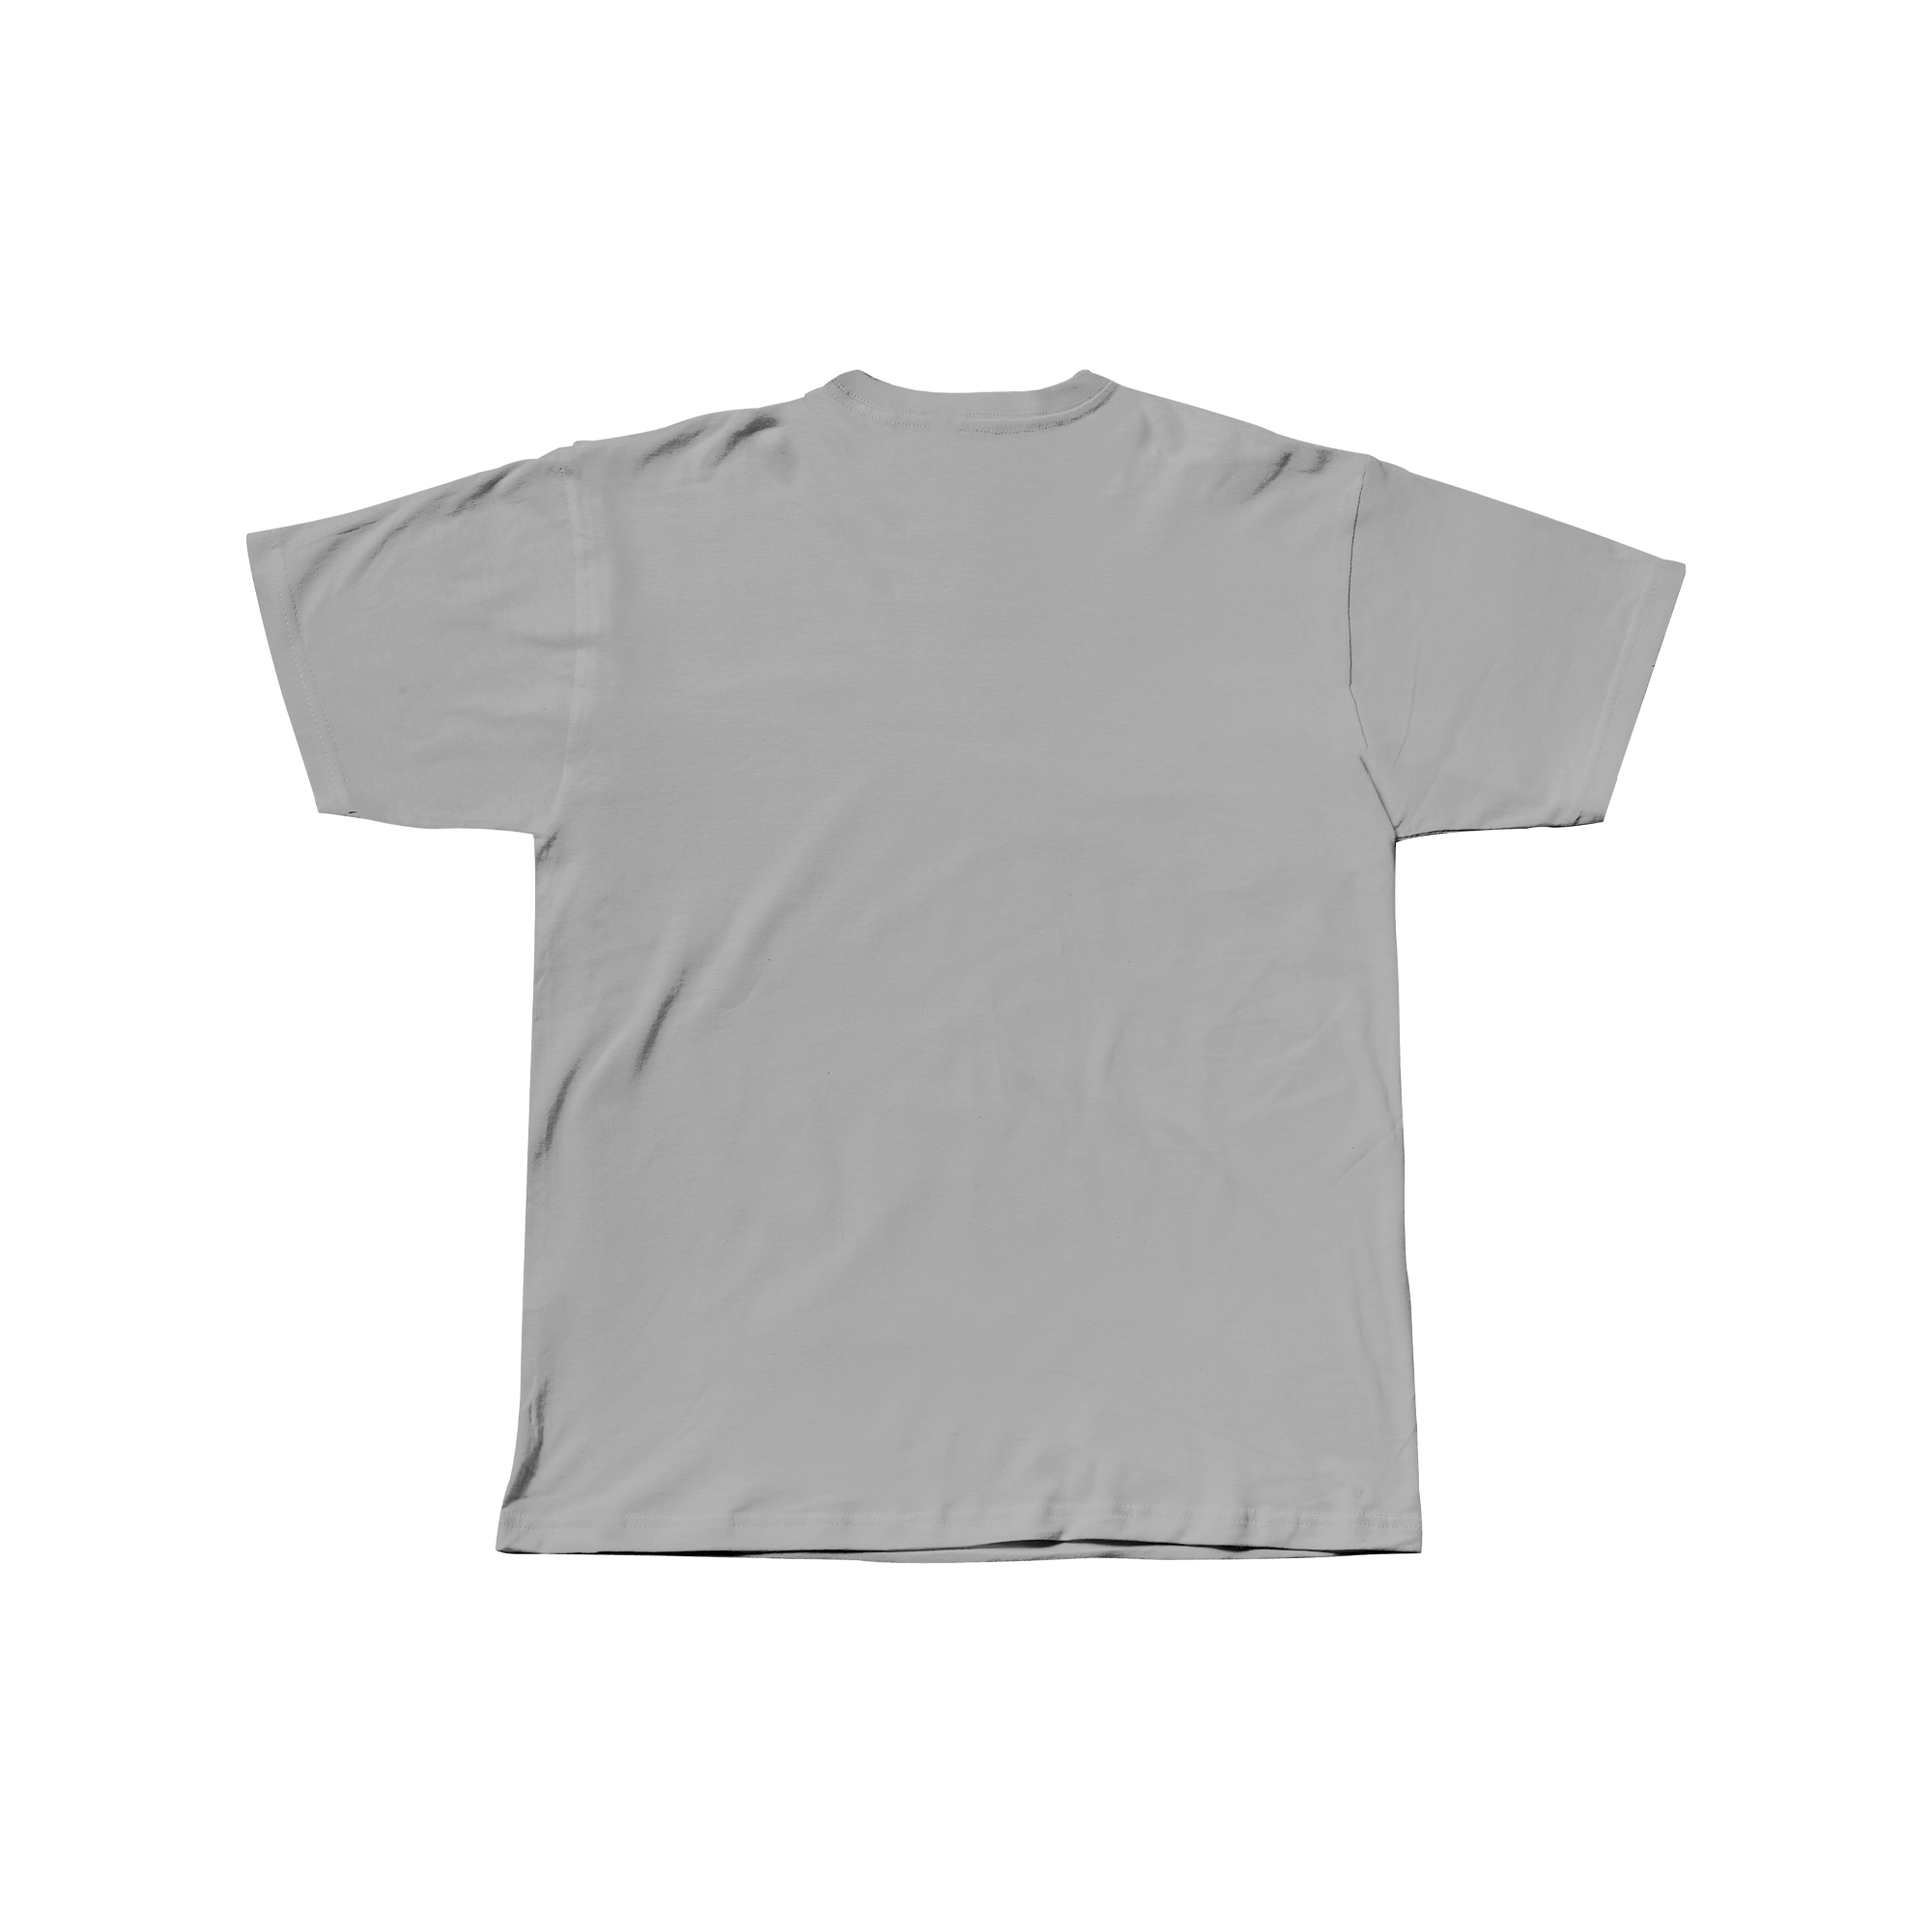 Mueveloreina ✶ Camiseta "Carne"